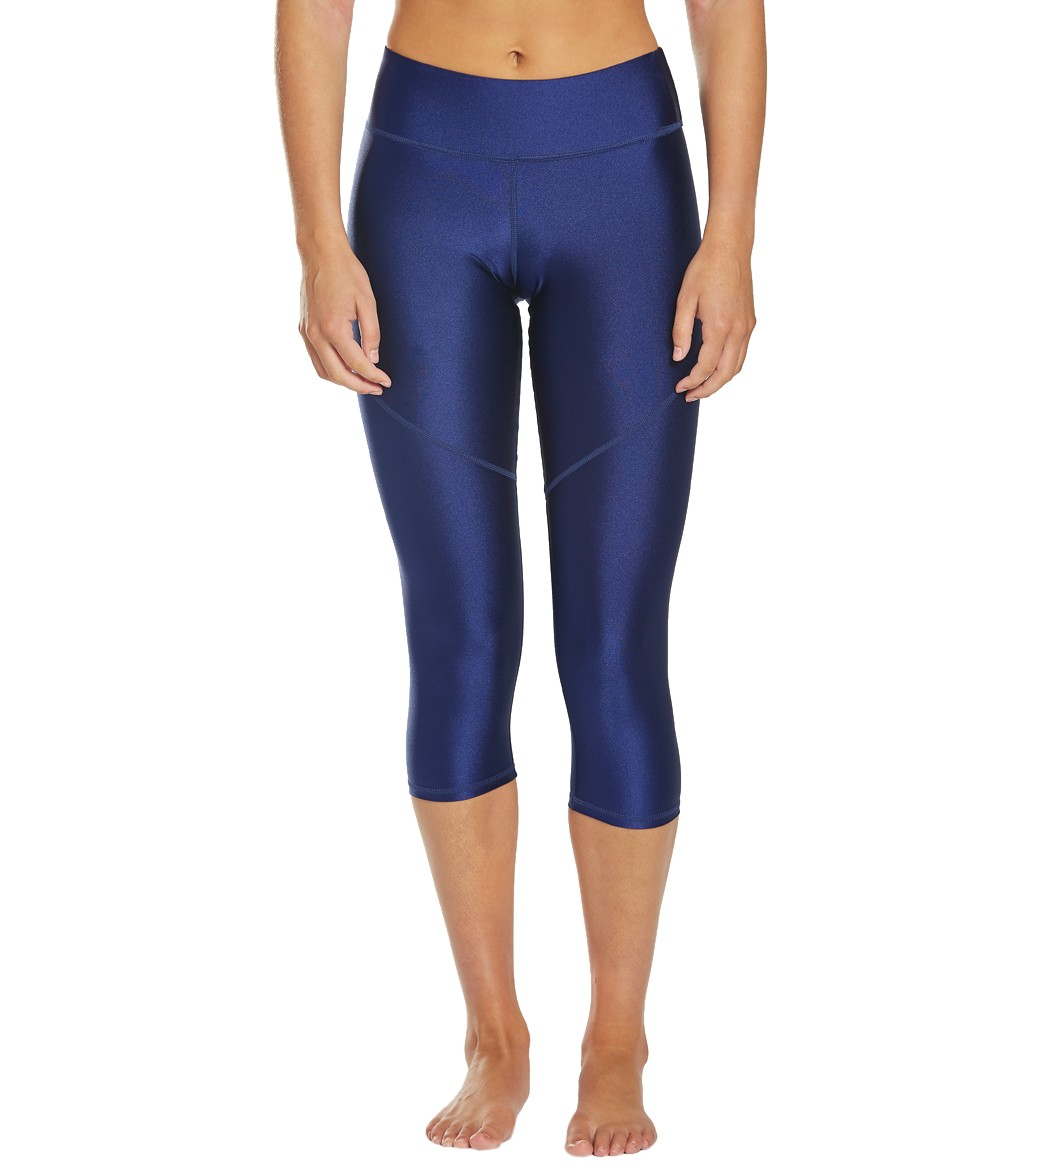 Dolfin Uglies Women's Revibe Solid High-Shine Aqua Capri Pants - Indigo Small Size Small Nylon/Spandex - Swimoutlet.com